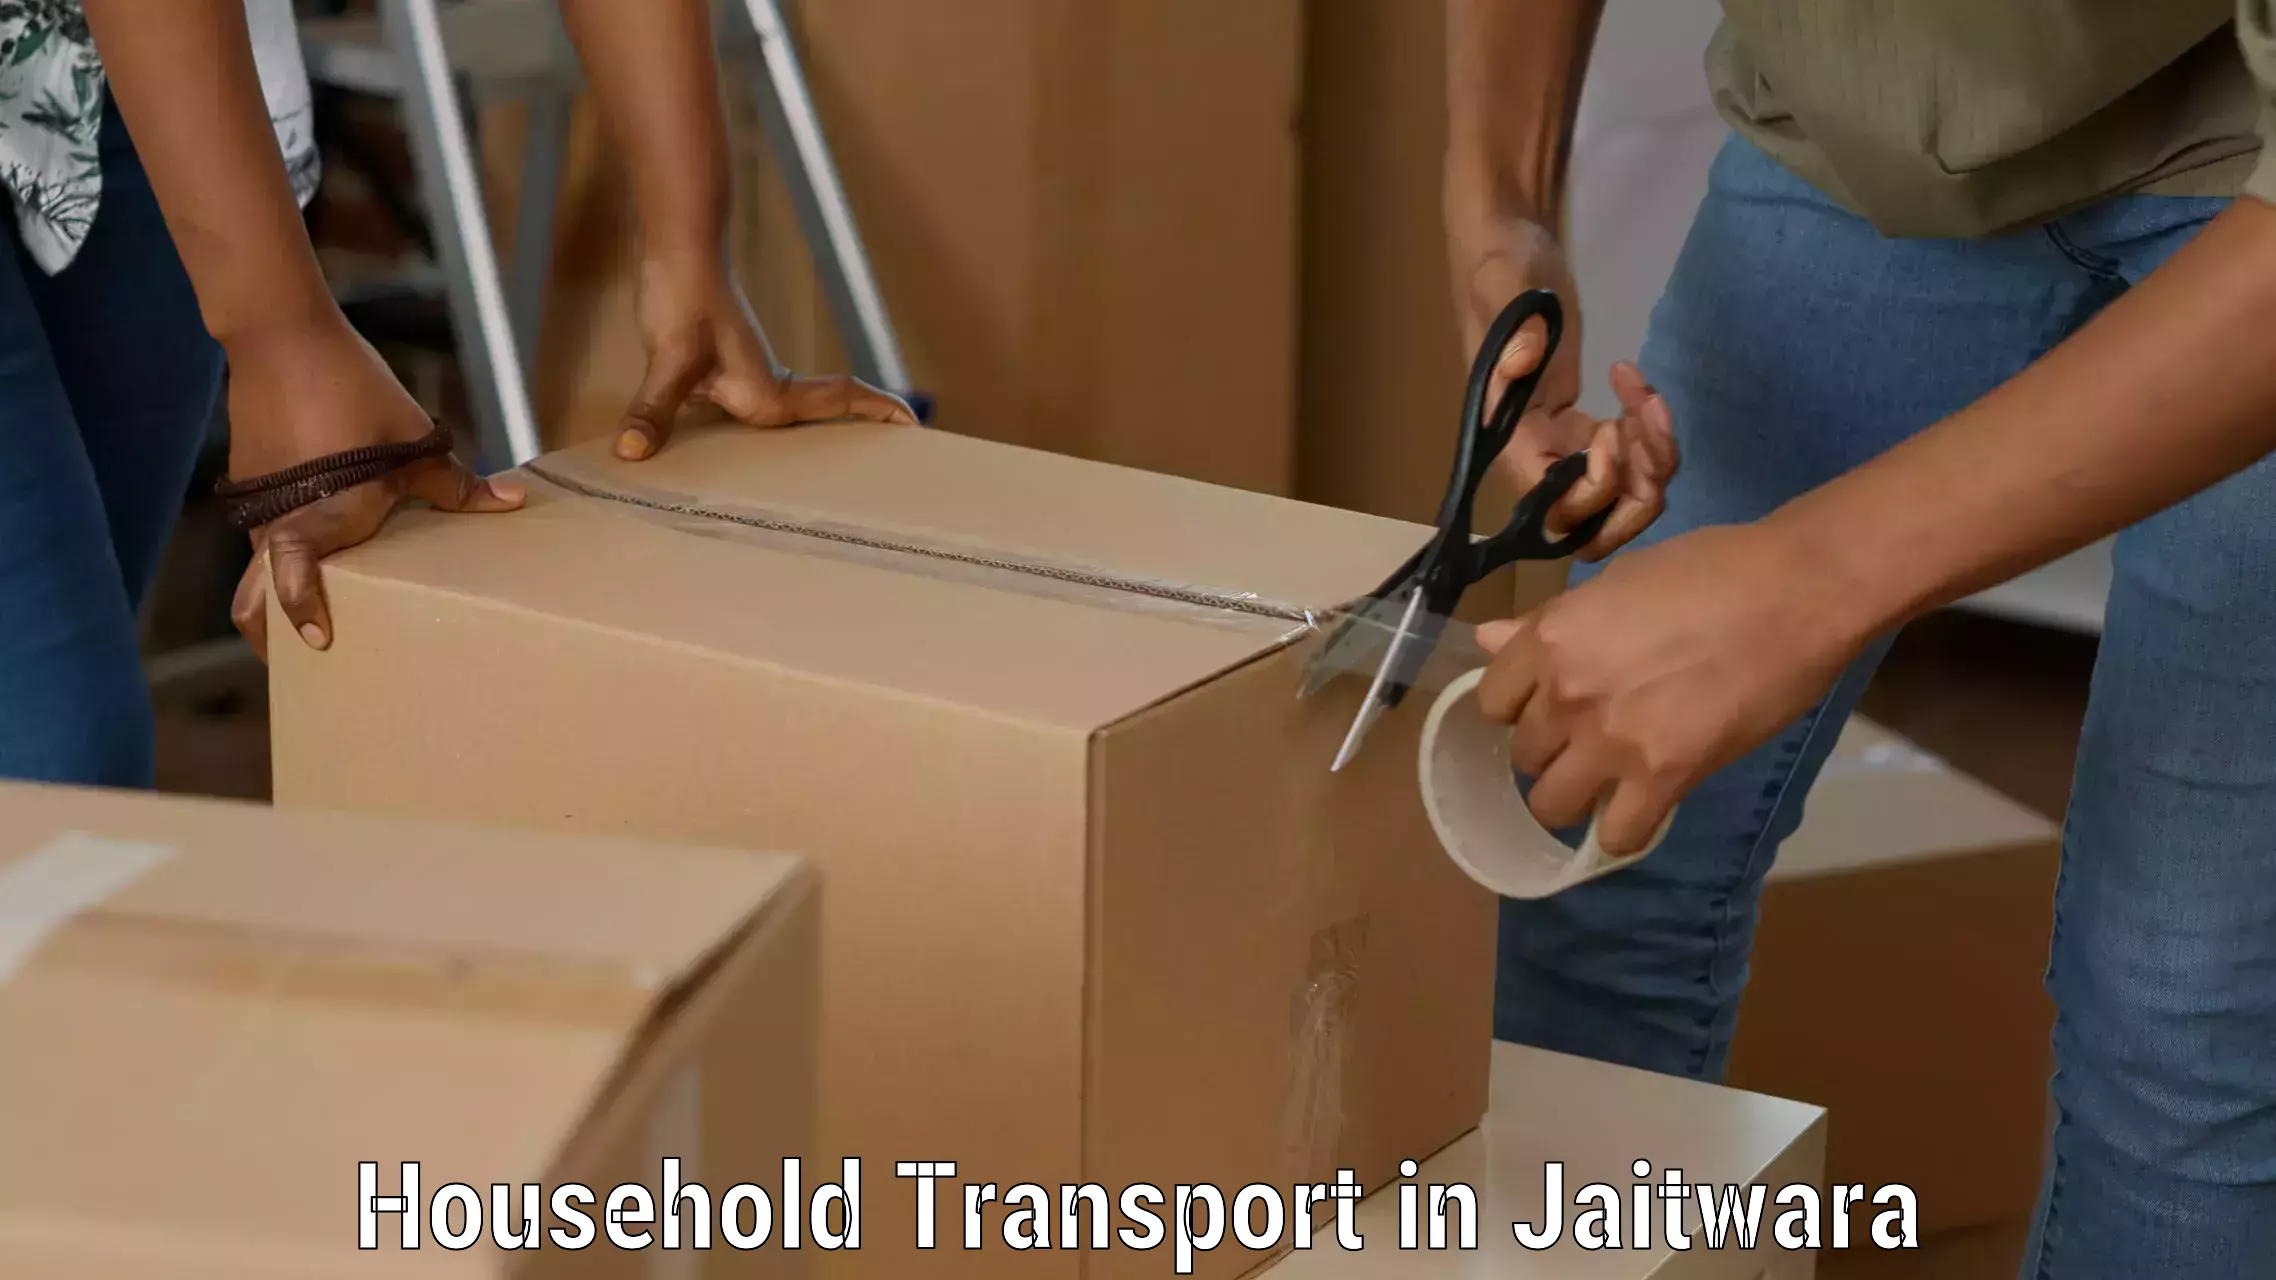 Professional goods transport in Jaitwara